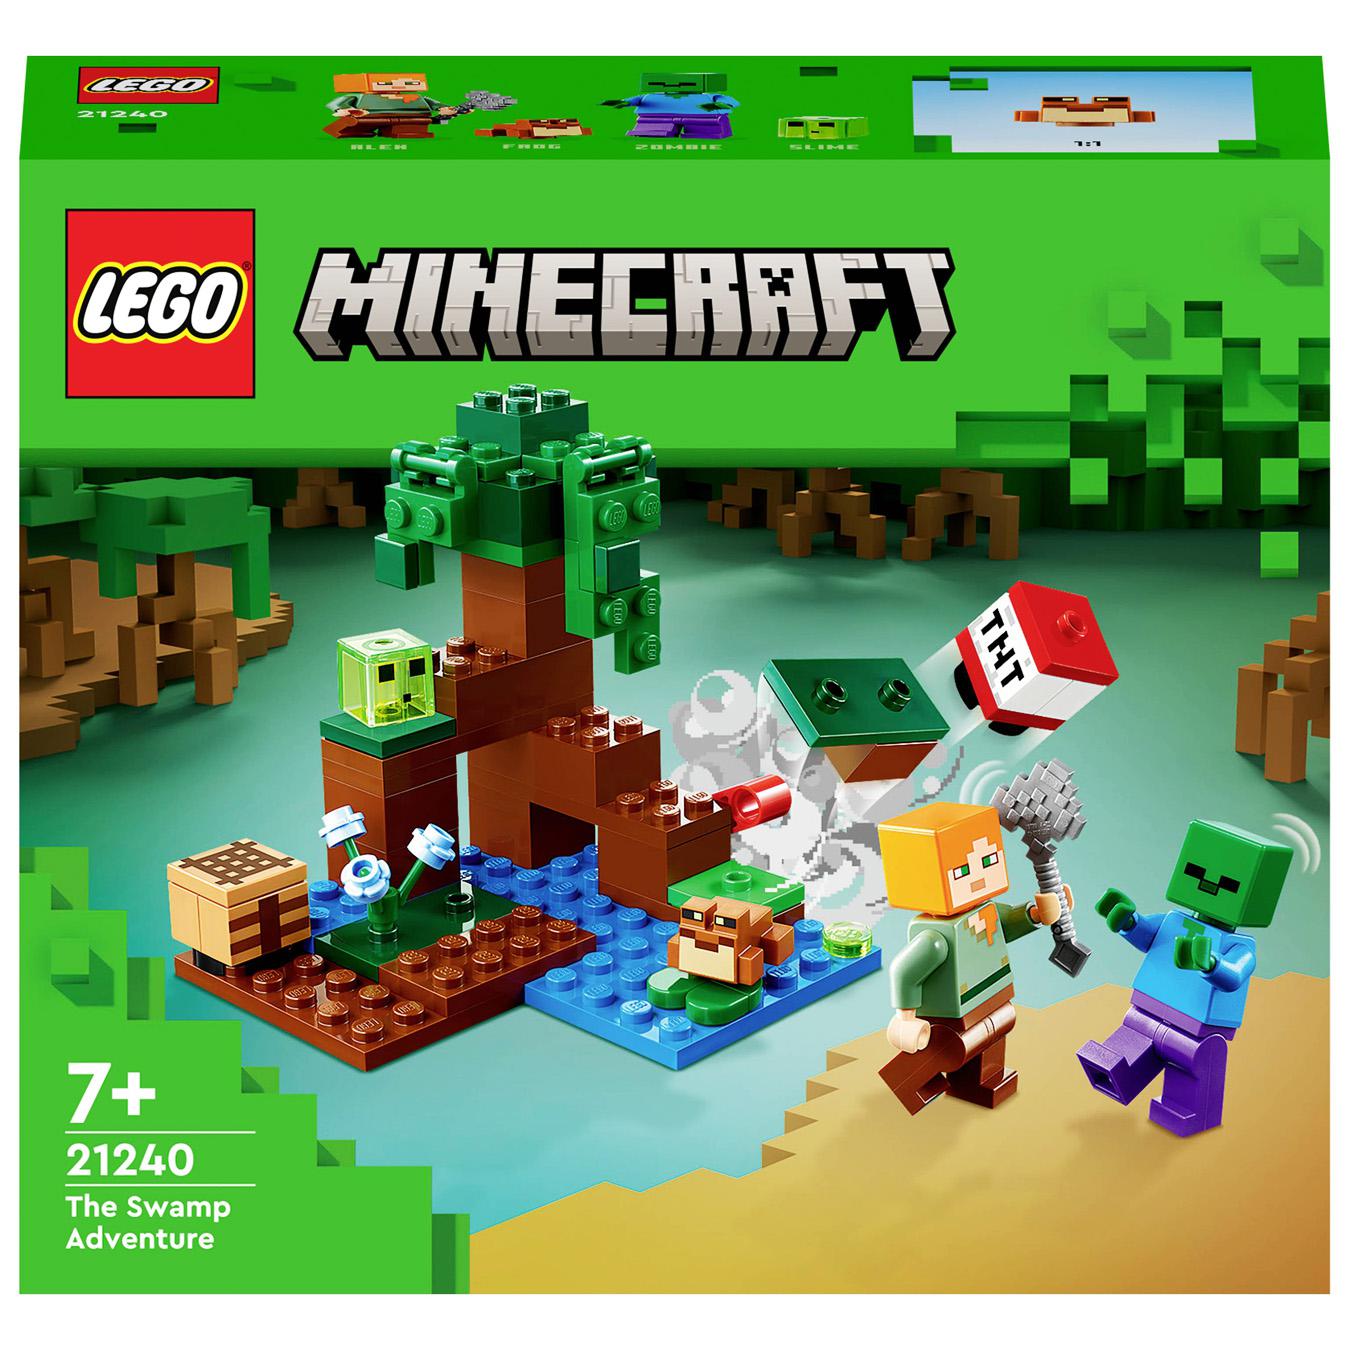 Constructor LEGO Minecraft Adventures in the swamp